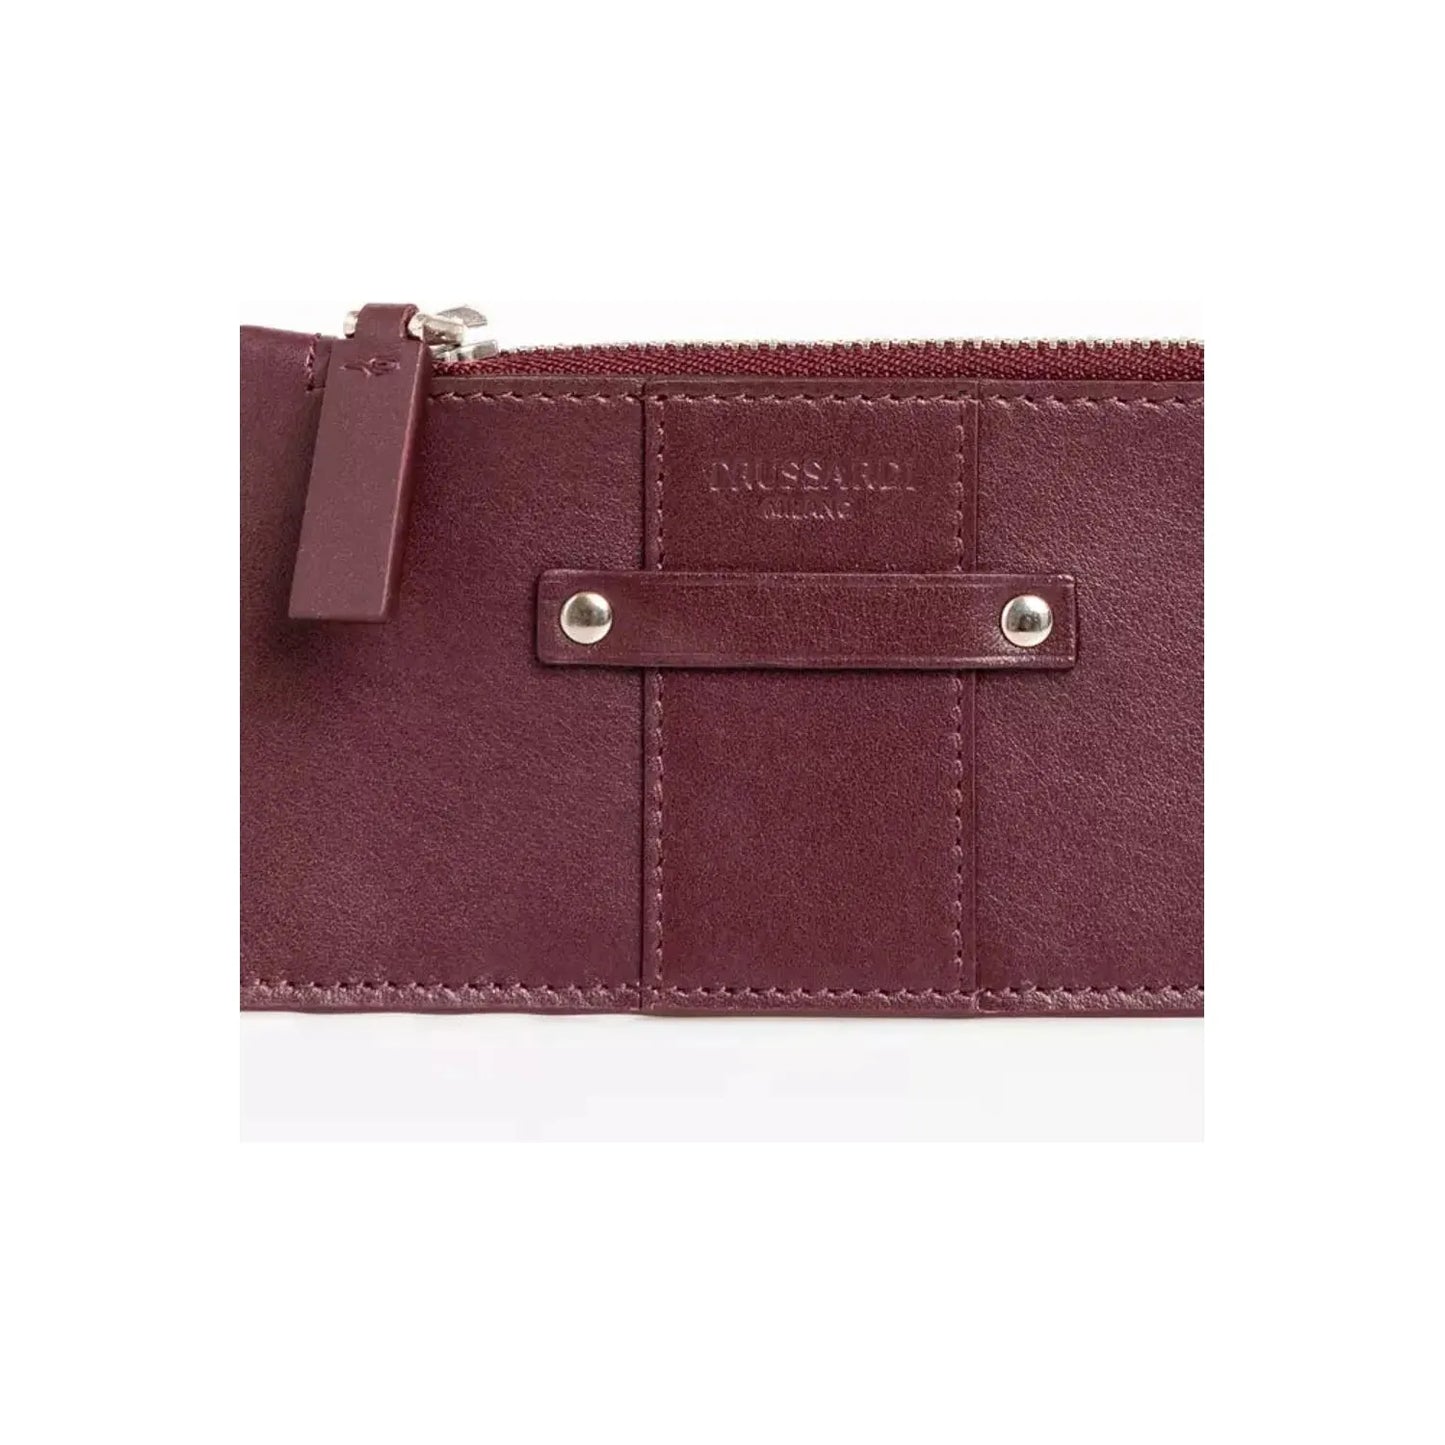 Trussardi Elegant Soft Leather Card Holder in Rich Brown r-wallet-6 Wallet stock_product_image_21579_807298518-25-d0d7815d-4a7.webp